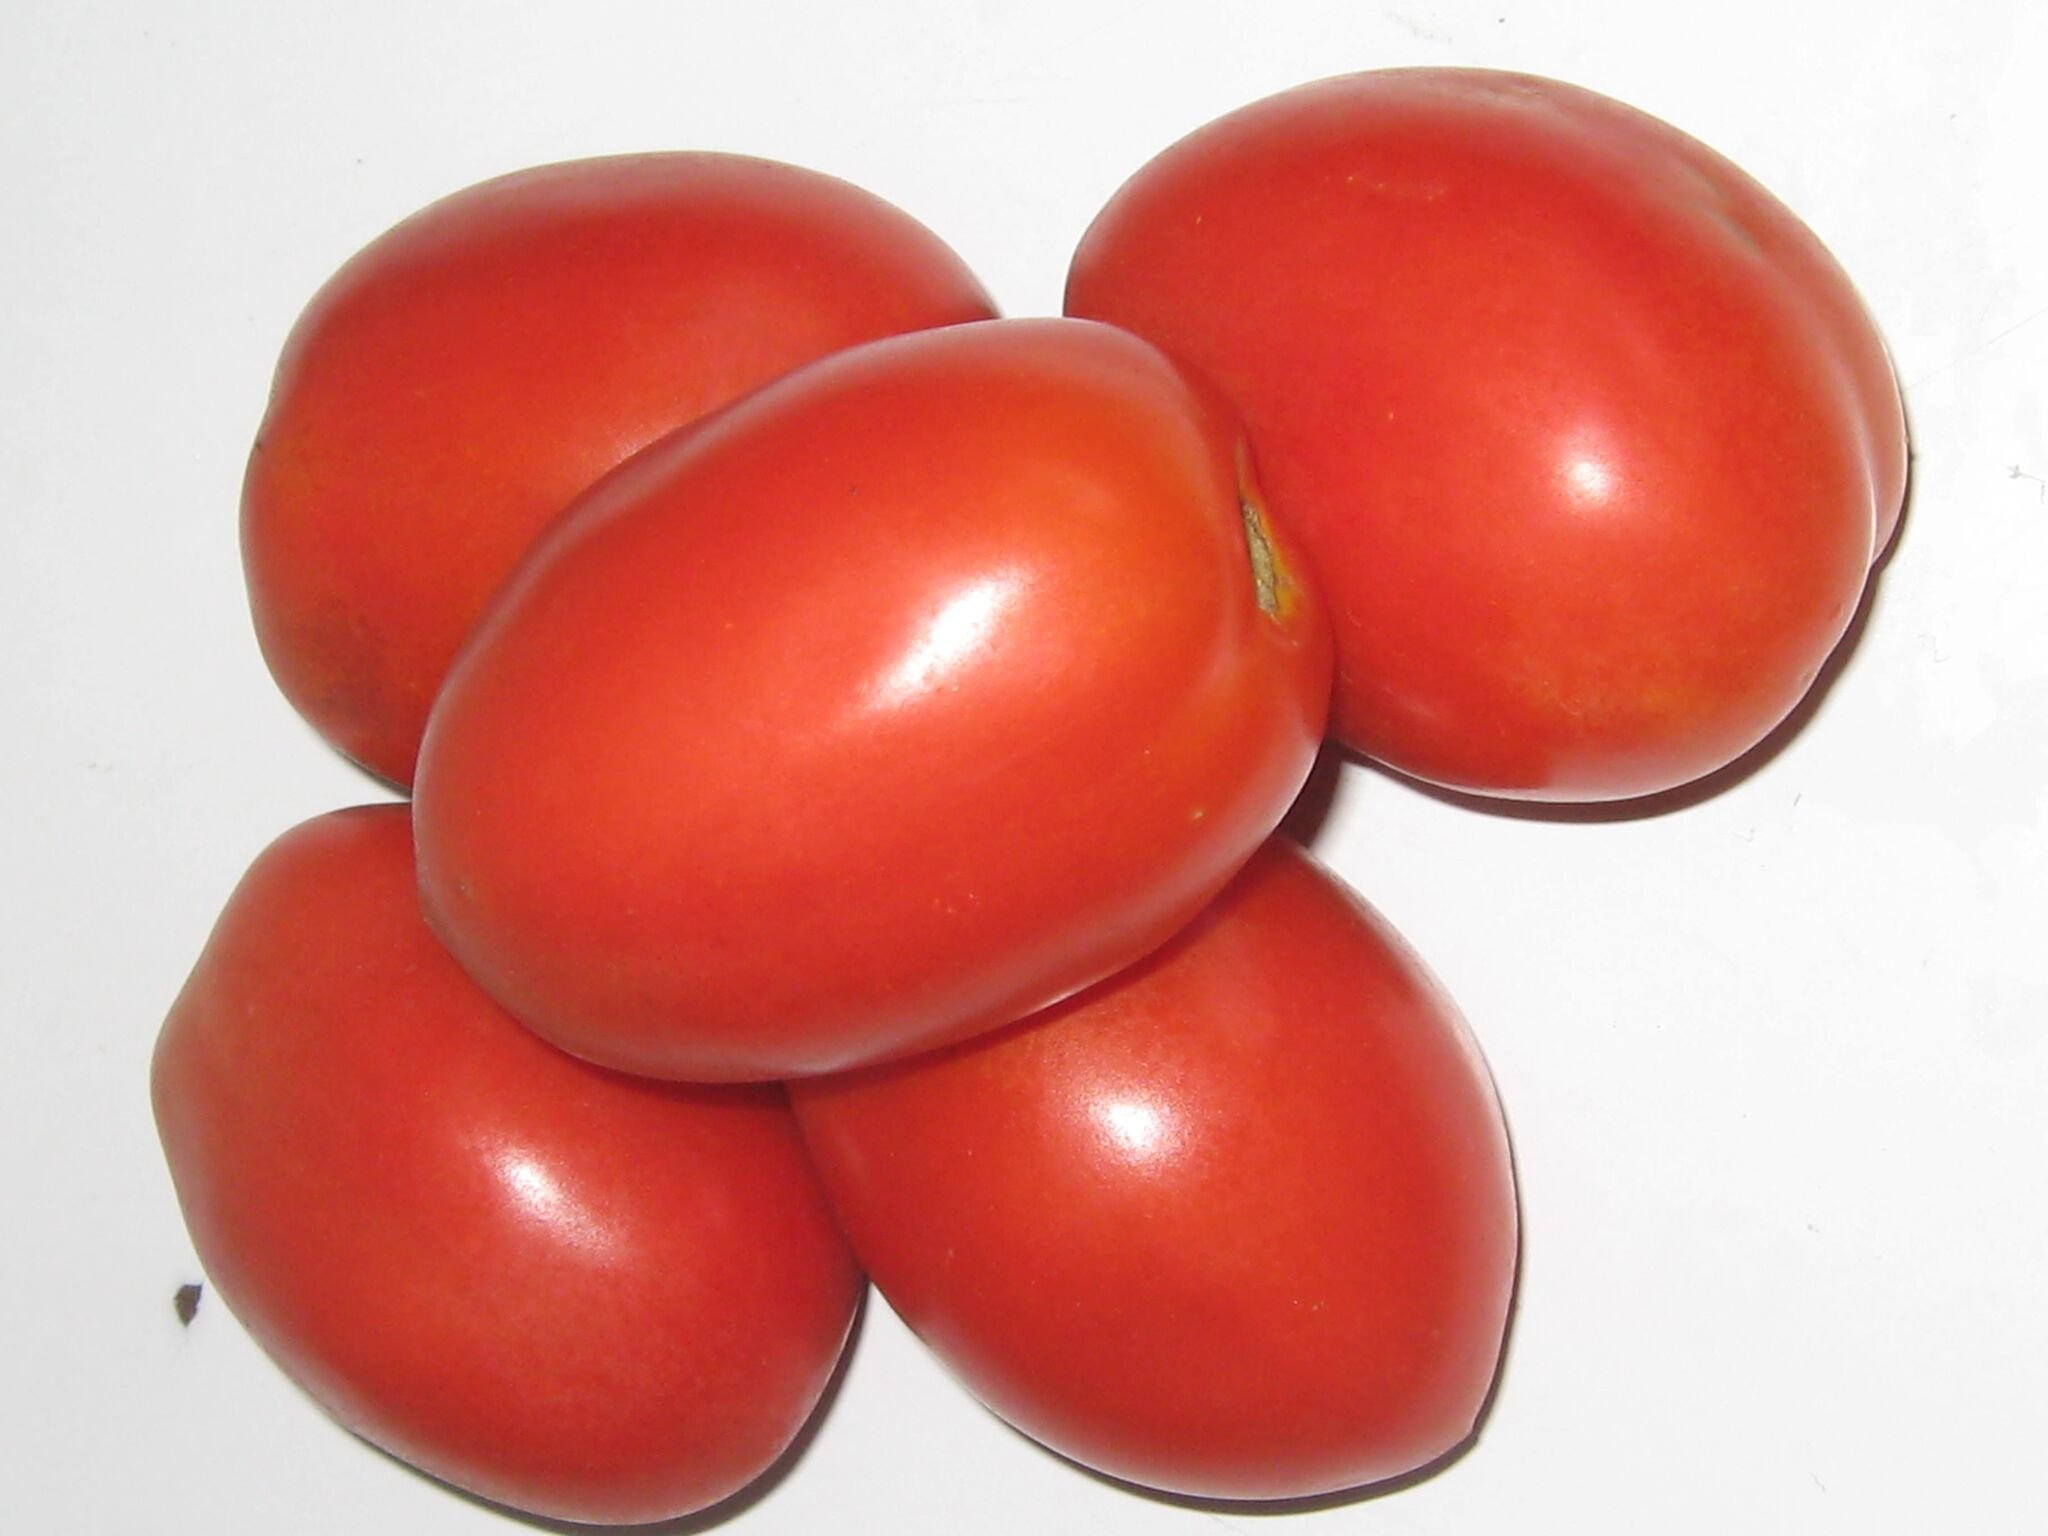 томат агата характеристика и фото